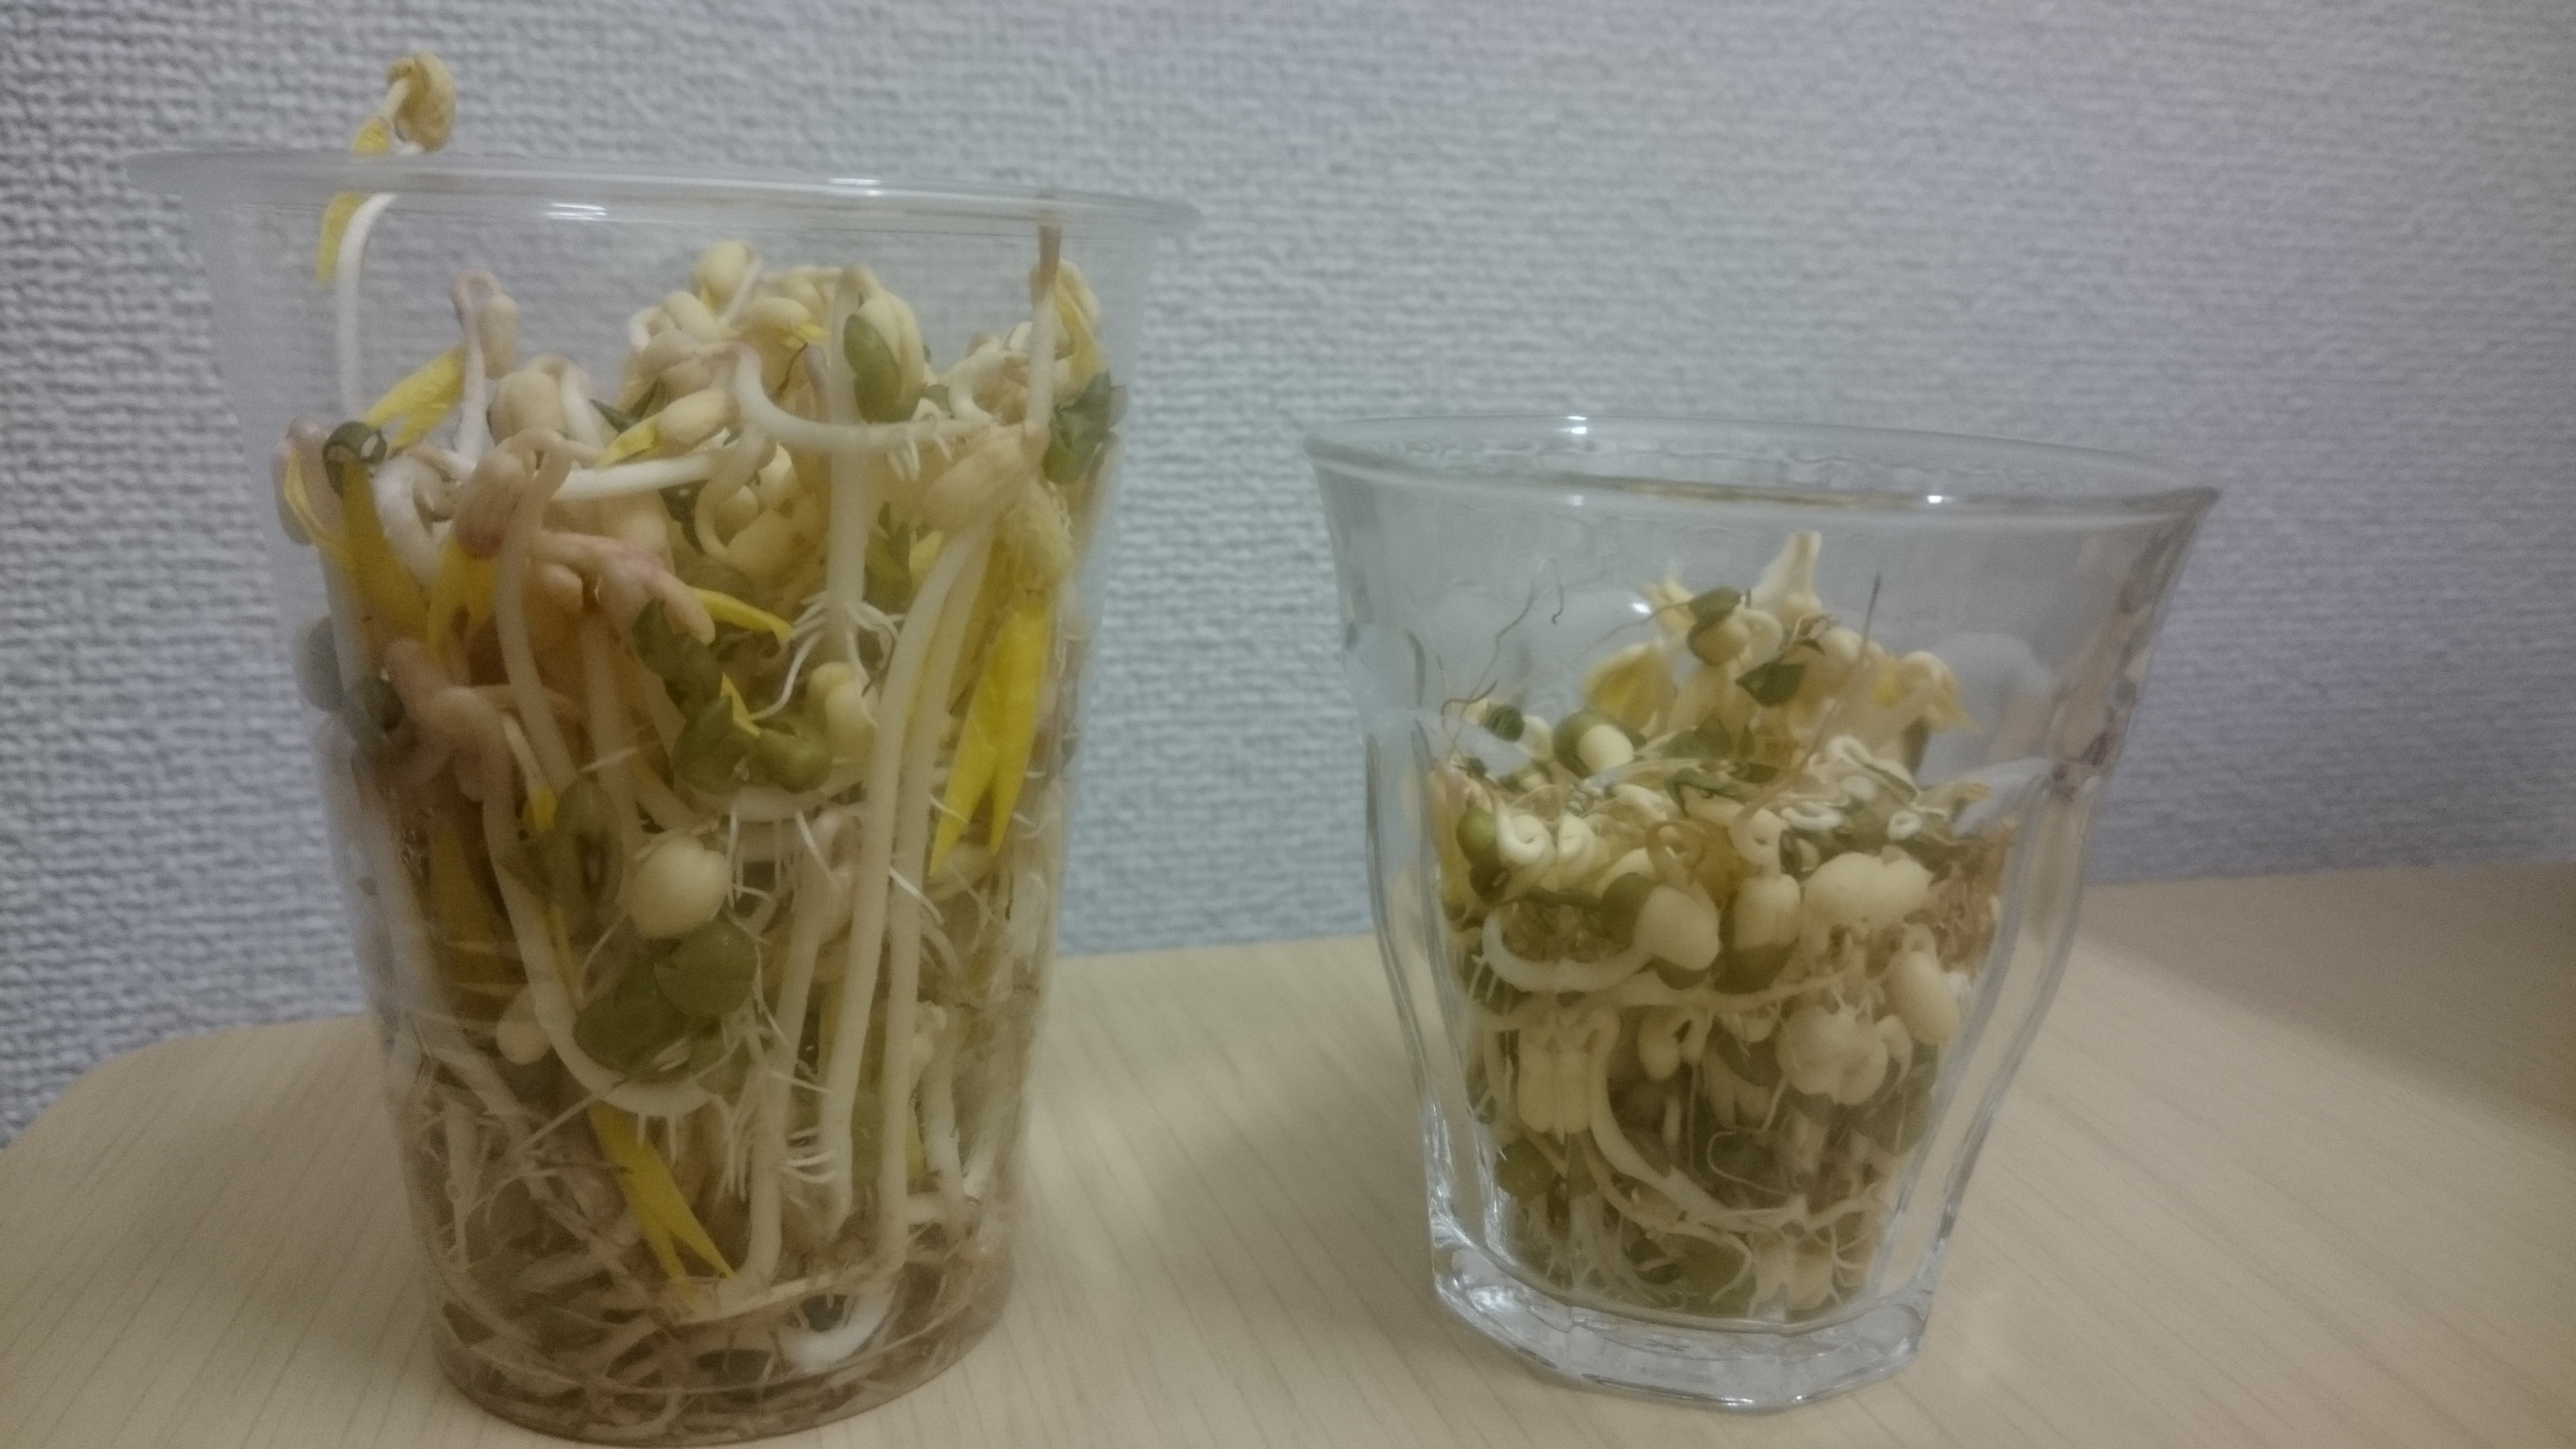 http://www.ige.tohoku.ac.jp/prg/watanabe/as-vegetable2018/images/DSC_0684.JPG